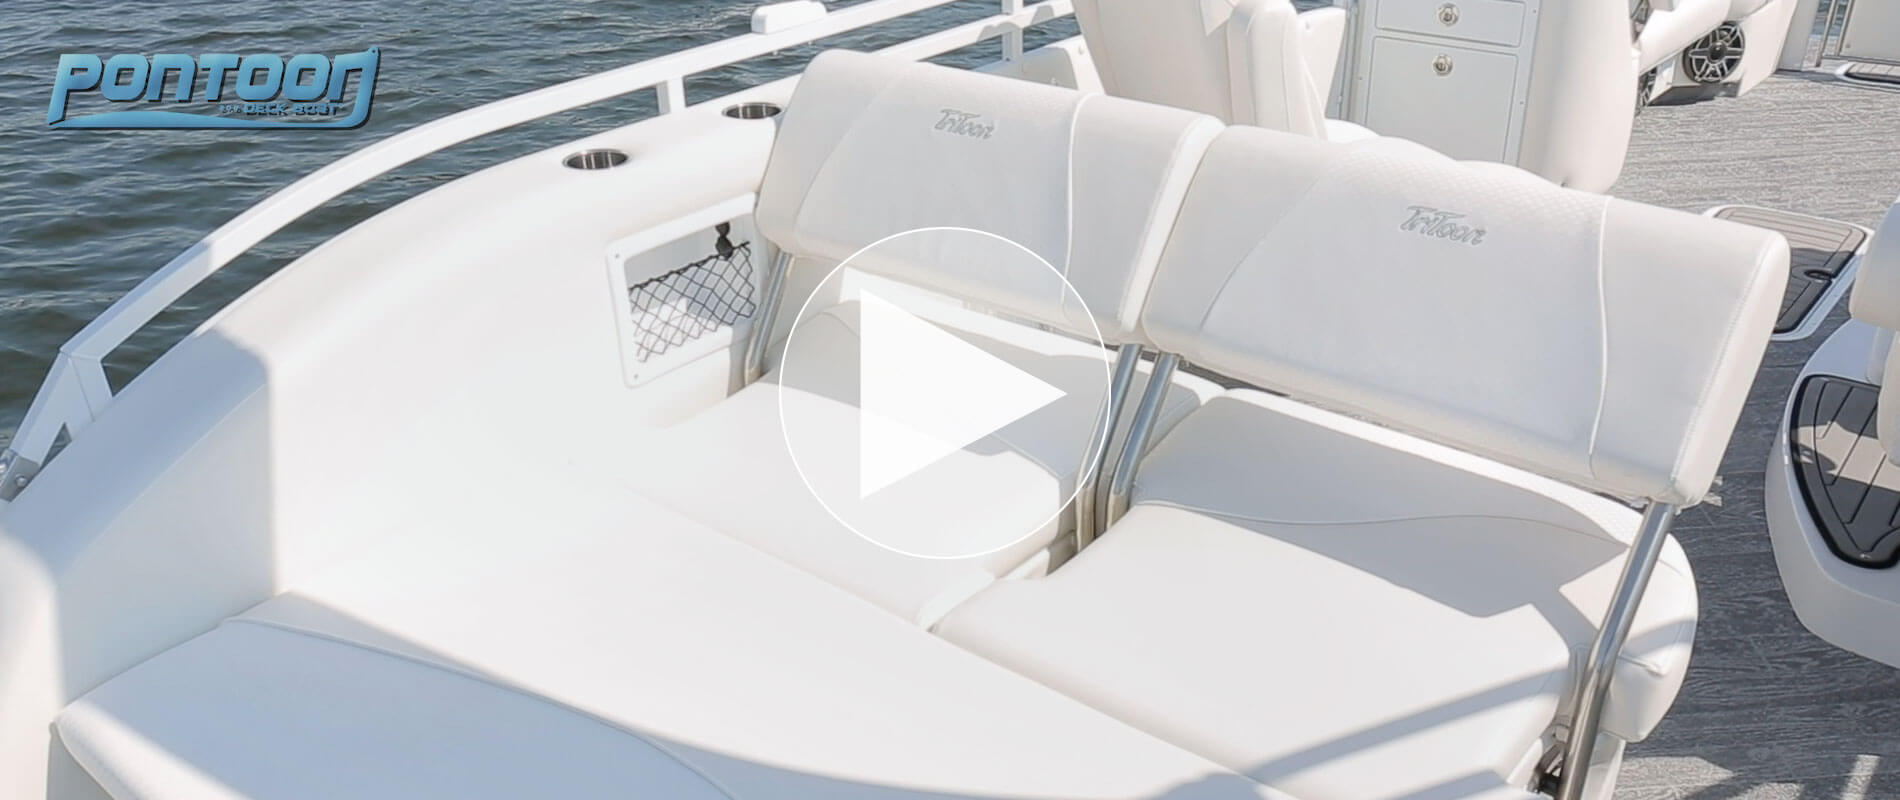 Pontoon & Deck Boat Magazine 2020 Shootout Video featuring the NepToon 25TT Sport HTH